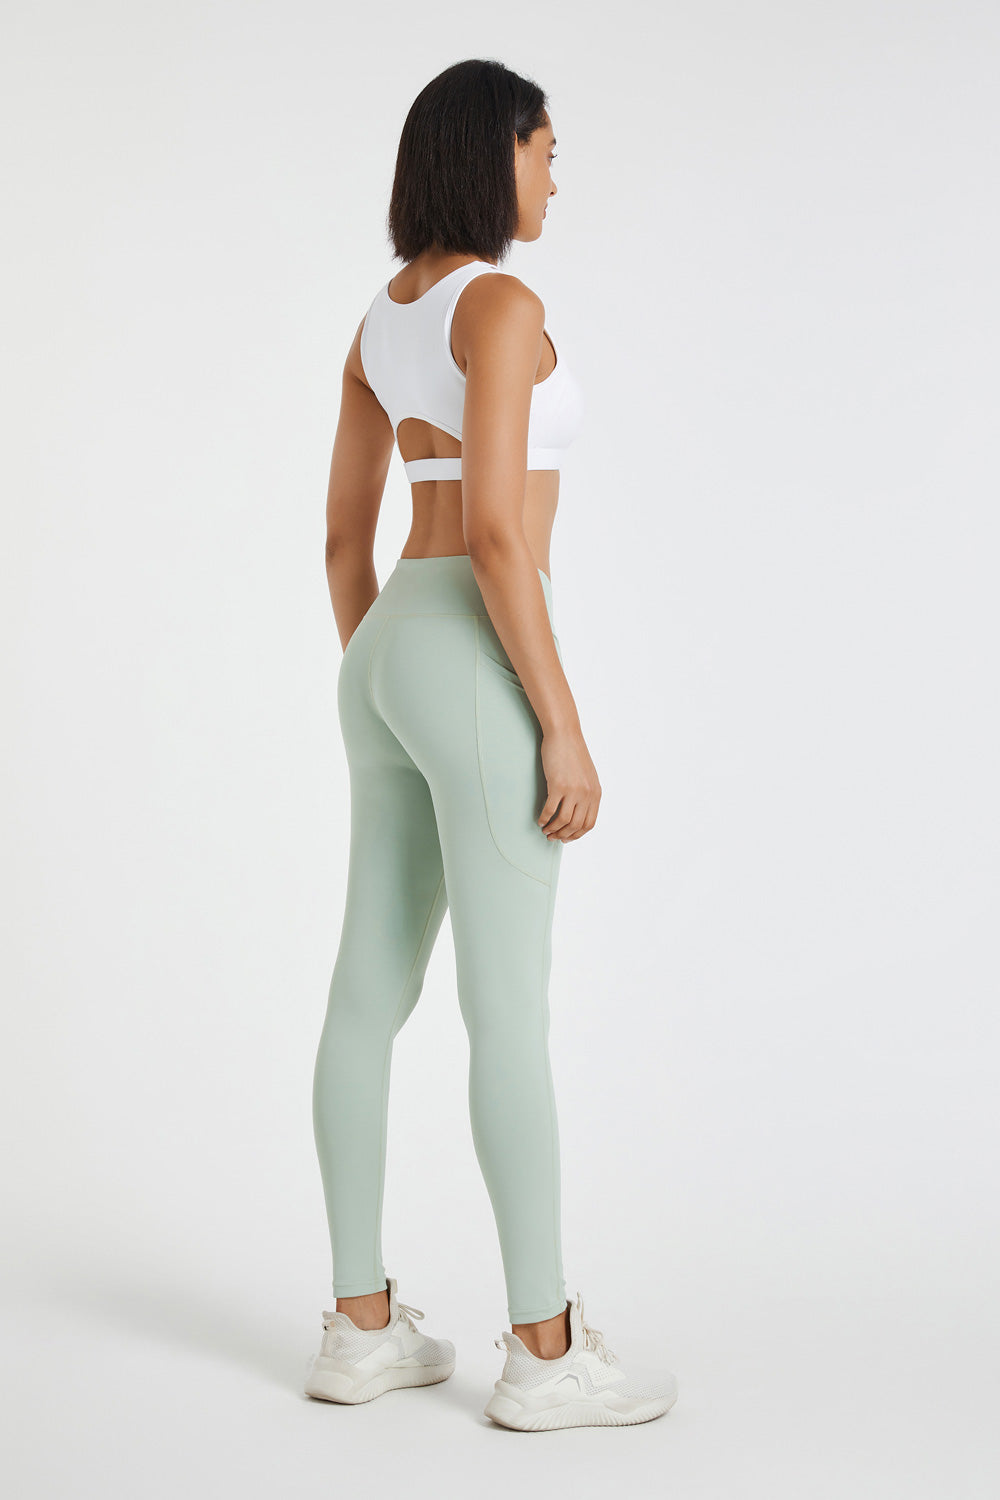 Sage Green Crossover Legging With Pockets - LA7 ONLINE